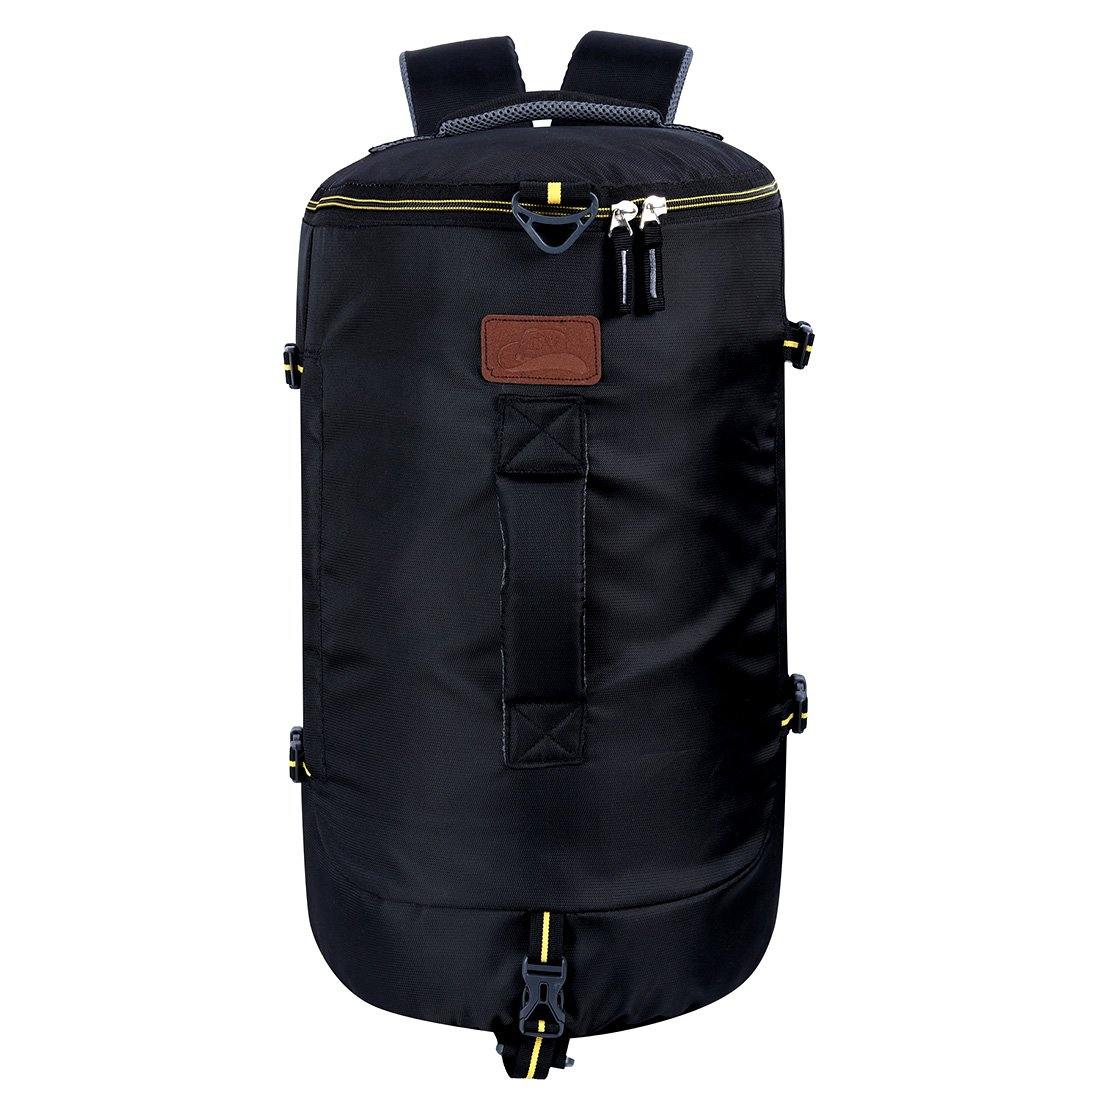 Buy Trekking & Travel Backpacks, Bags Online Shopping India | TRAWOC